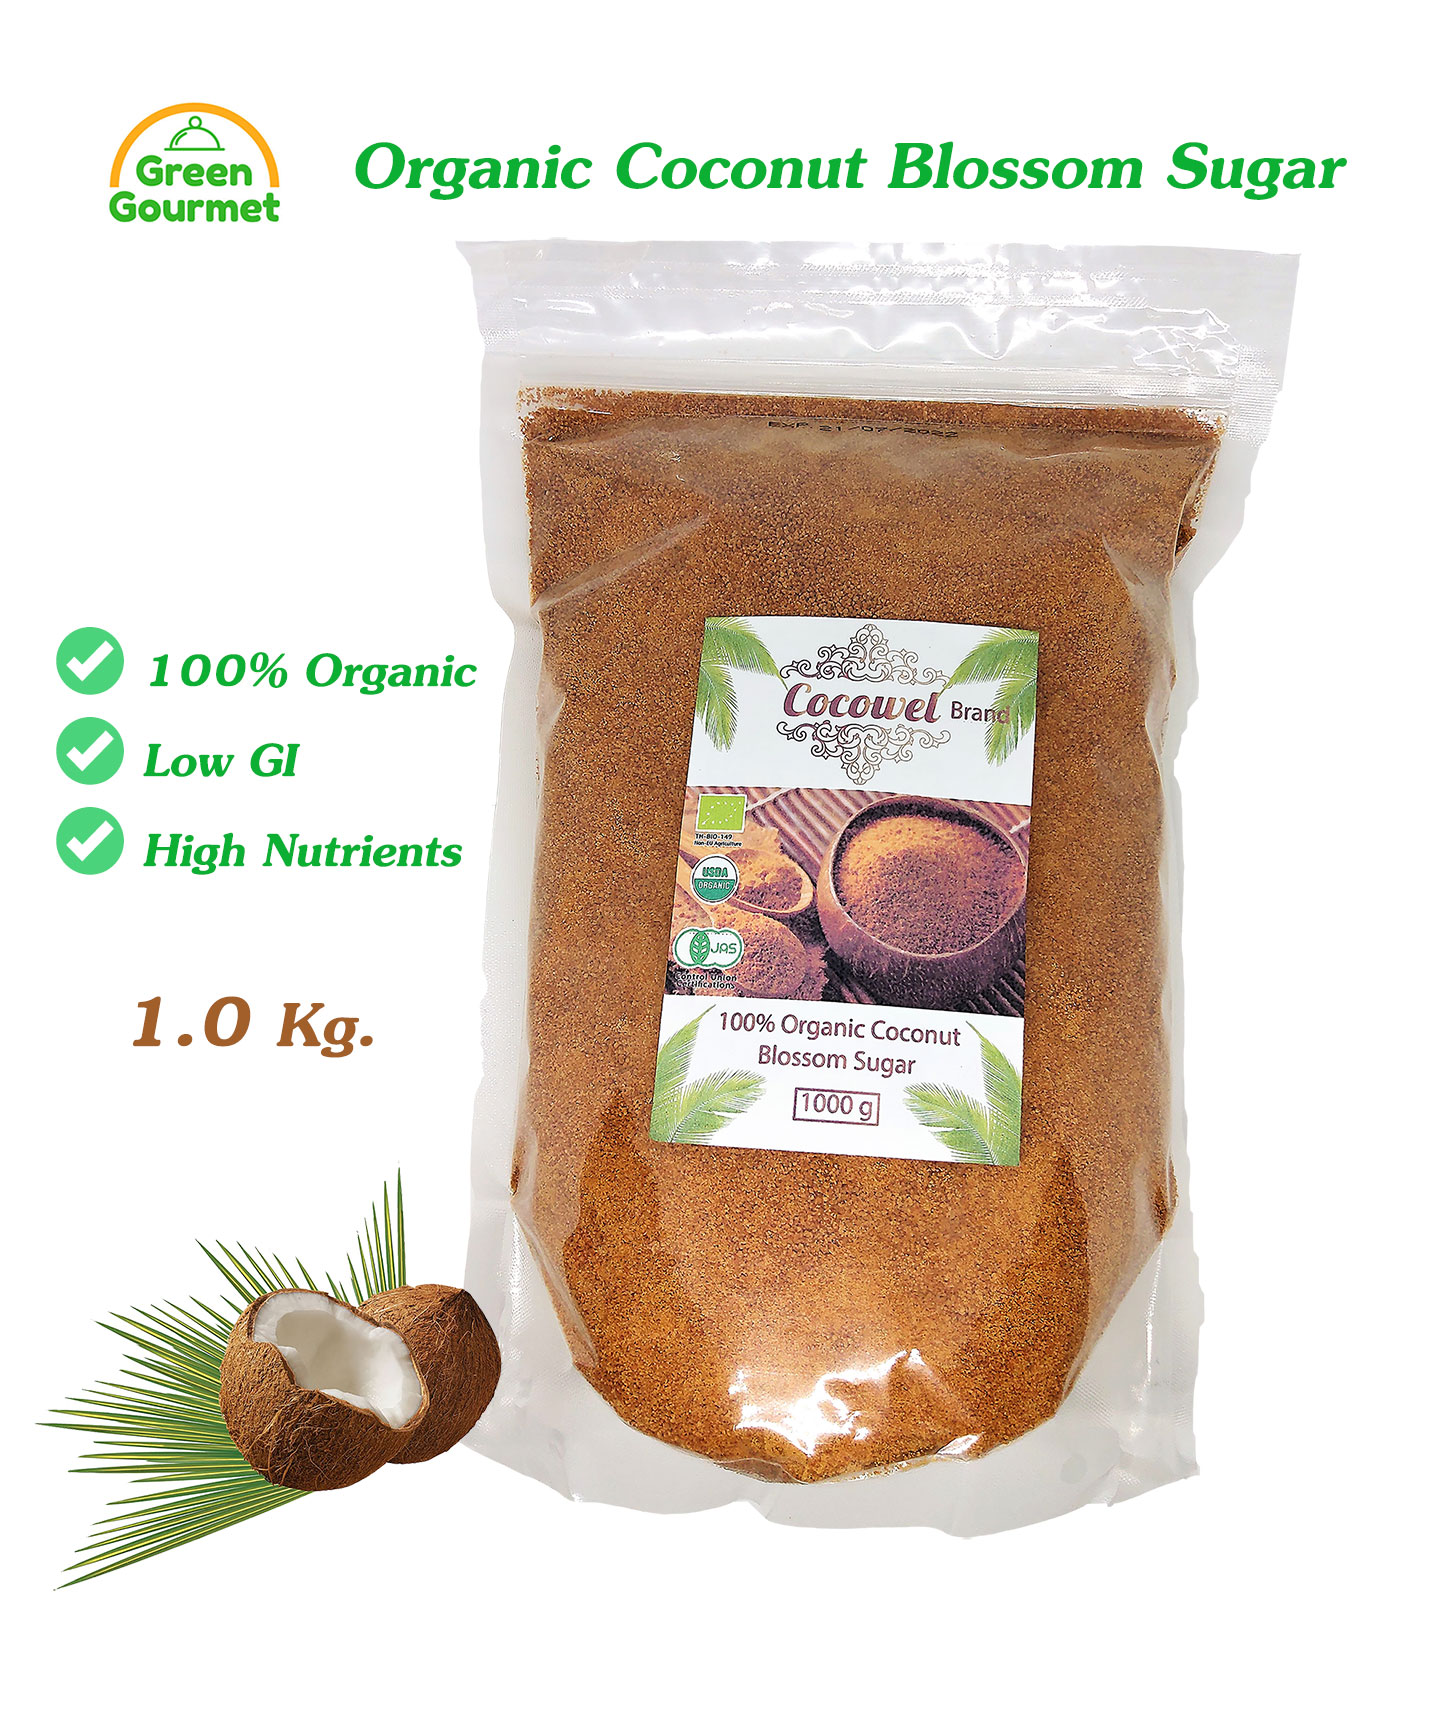 Cocowel น้ำตาลดอกมะพร้าว ออร์แกนิค ชนิดผง 1 กิโลกรัม (Organic Coconut Blossom Sugar 1 Kg.) หอม หวาน ธรรมชาติ ค่าดัชนีน้ำ้ตาลต่ำ เบาหวานทานได้ ประโยชน์สูง